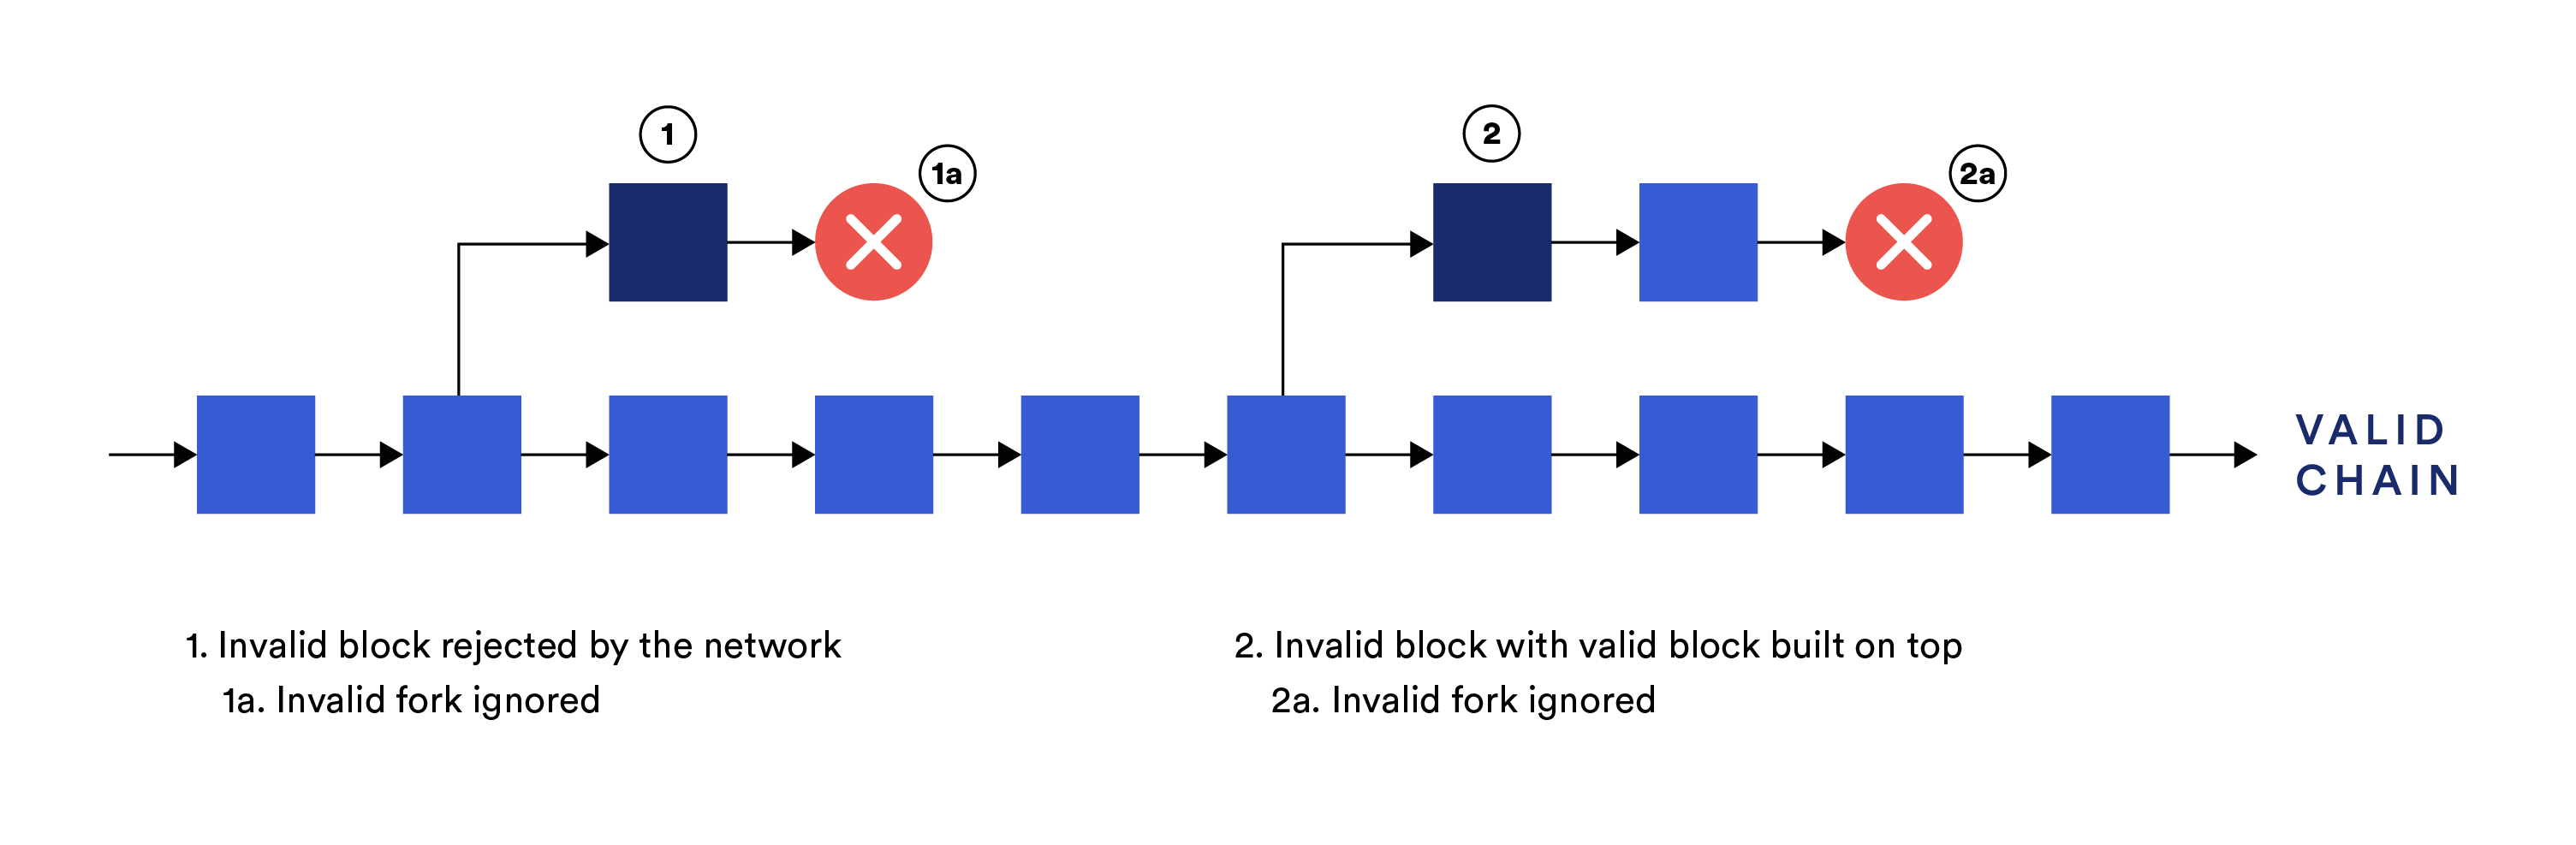 Full nodes reject invalid blocks